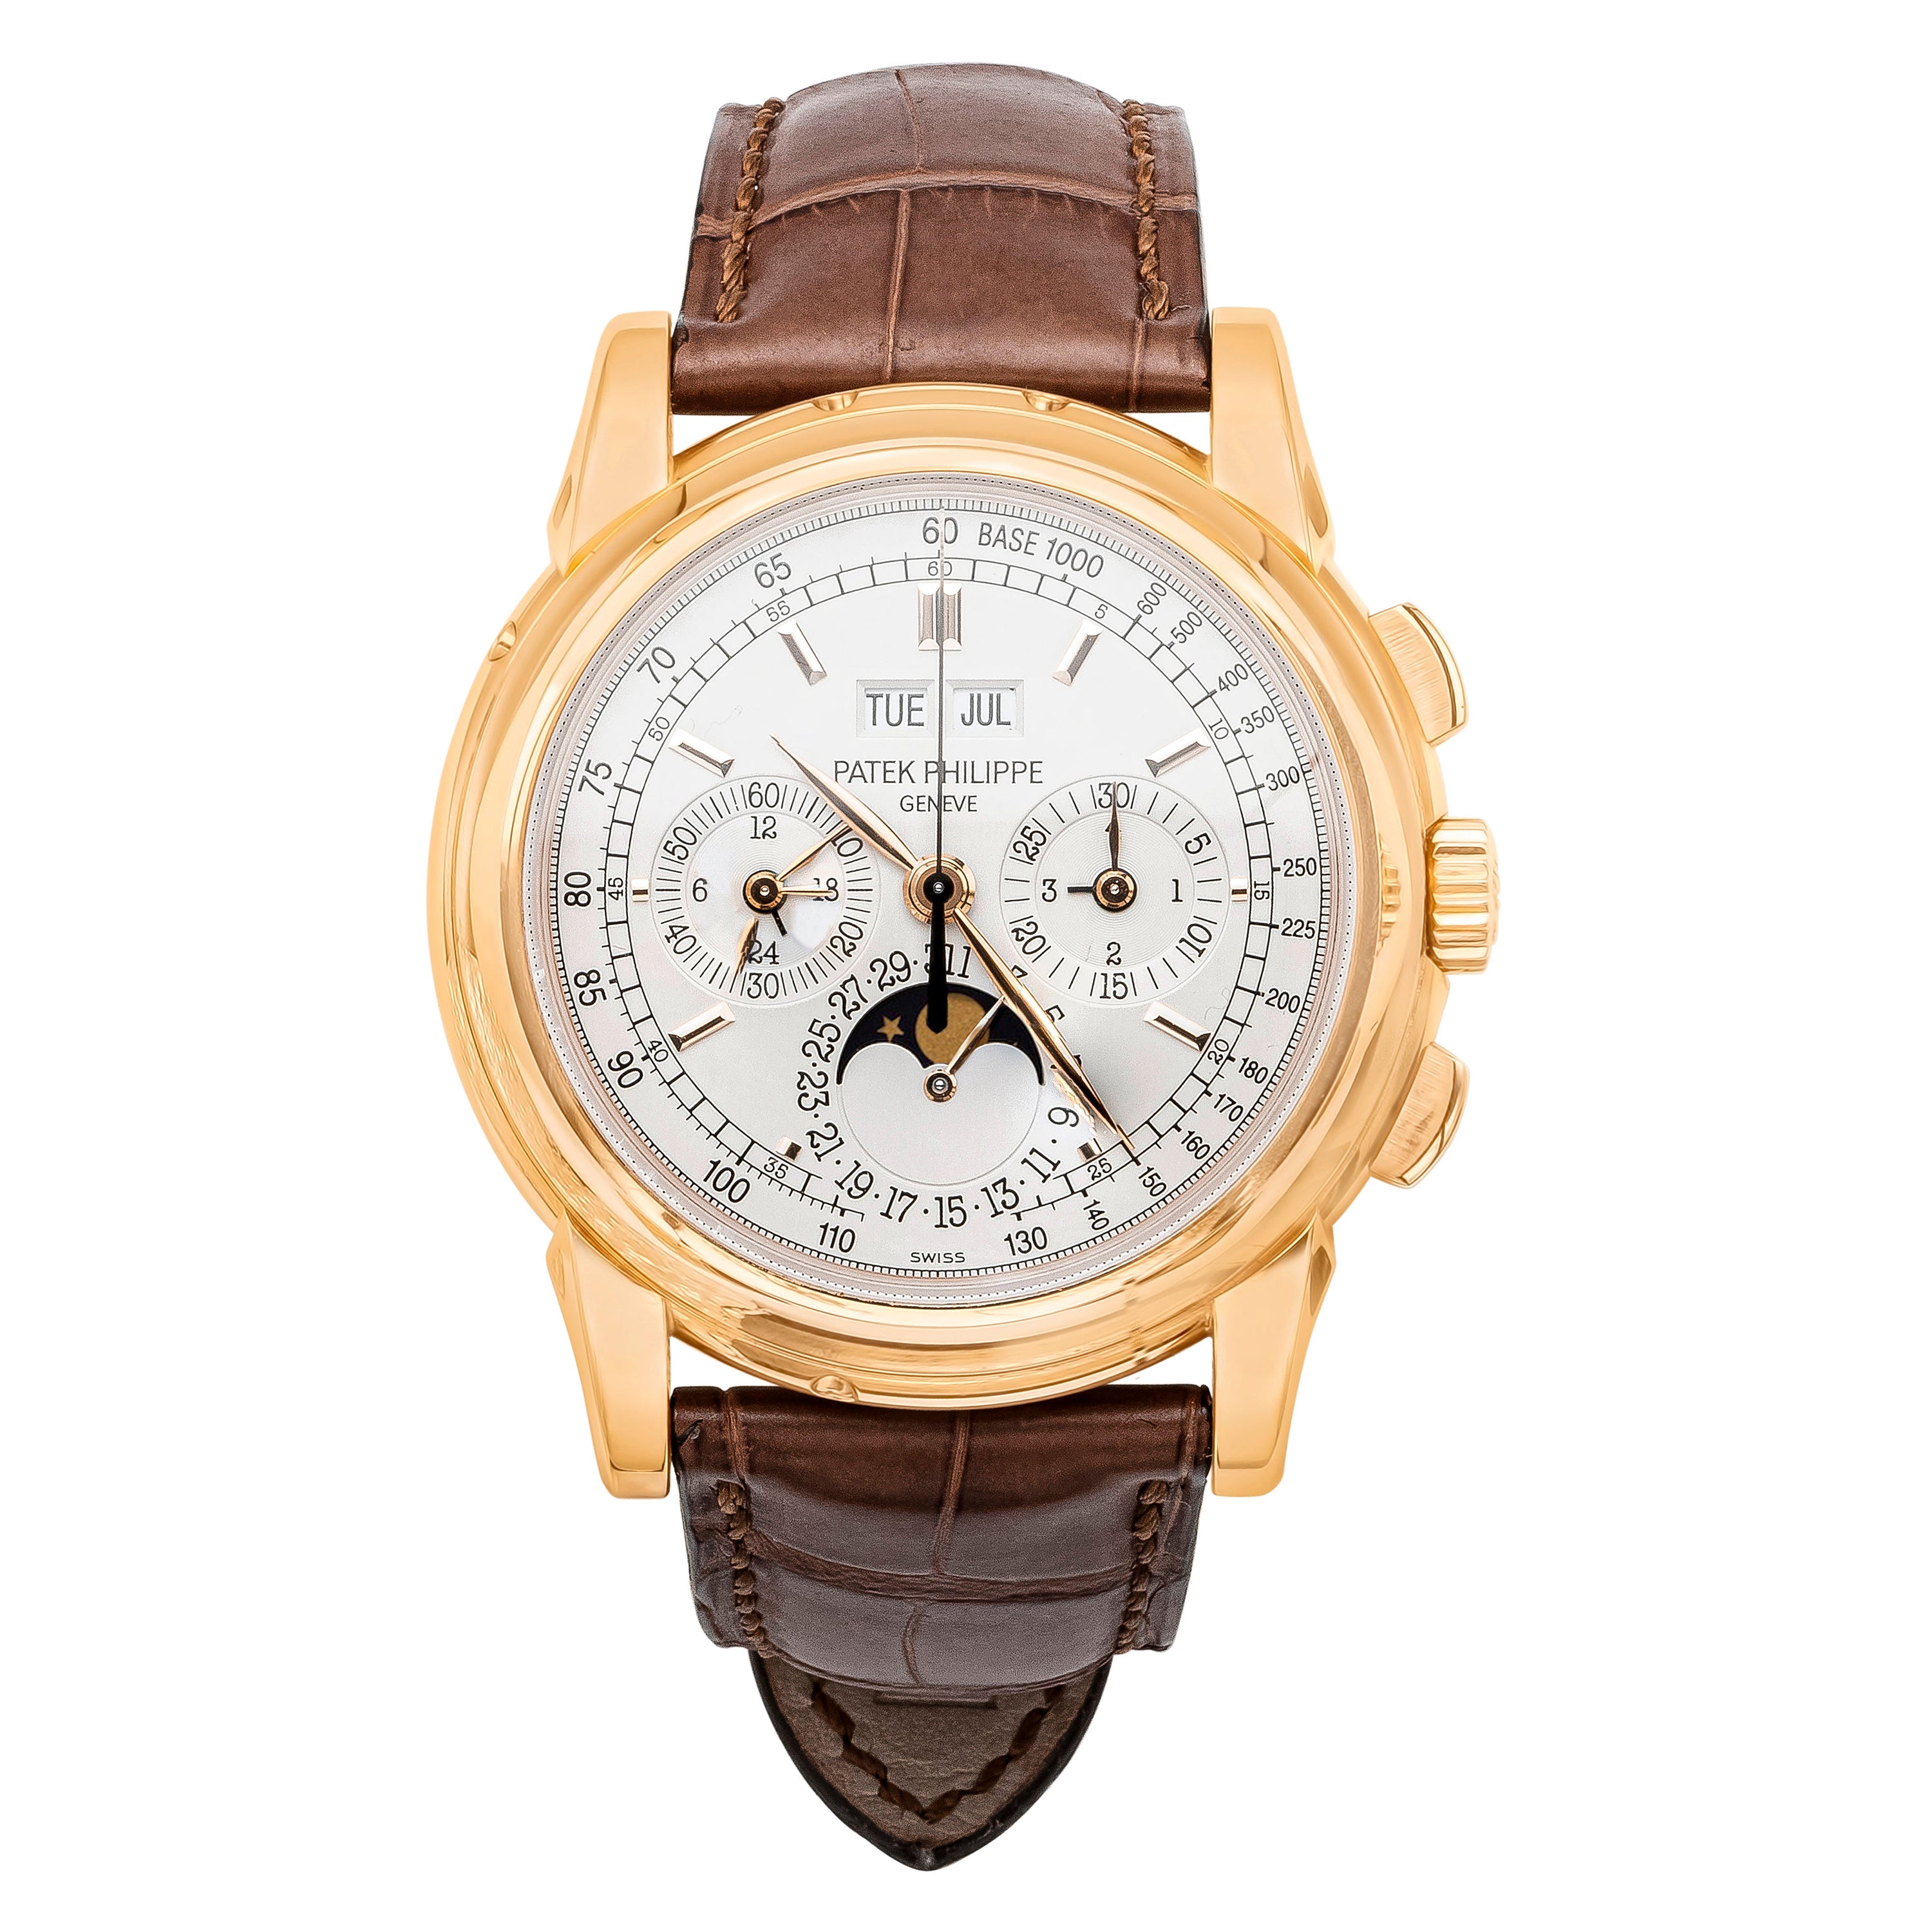 Patek Philippe 5970R Grand Complications Perpetual Calendar Chronograph Watch